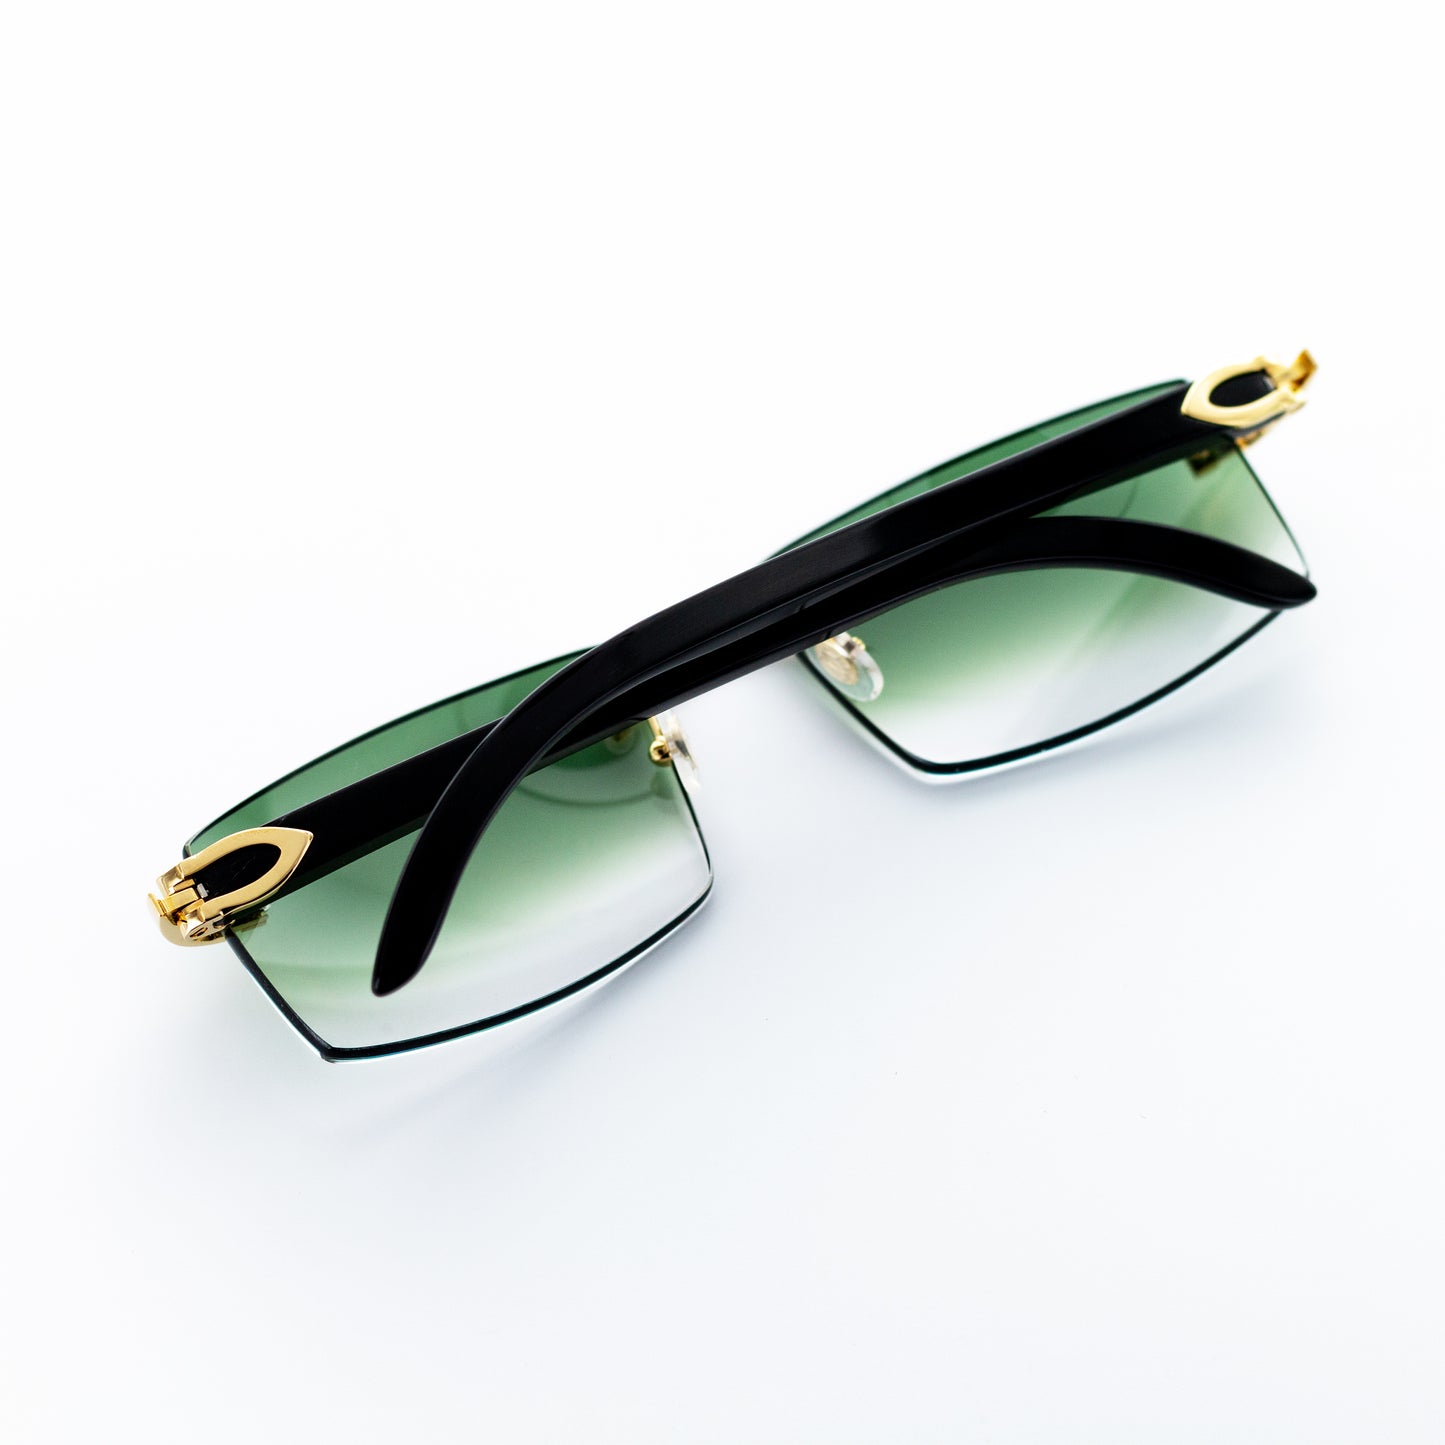 Cartier Black Horn Glasses, Buffs, Gold Detail, Money Green Lens CT0049O-001